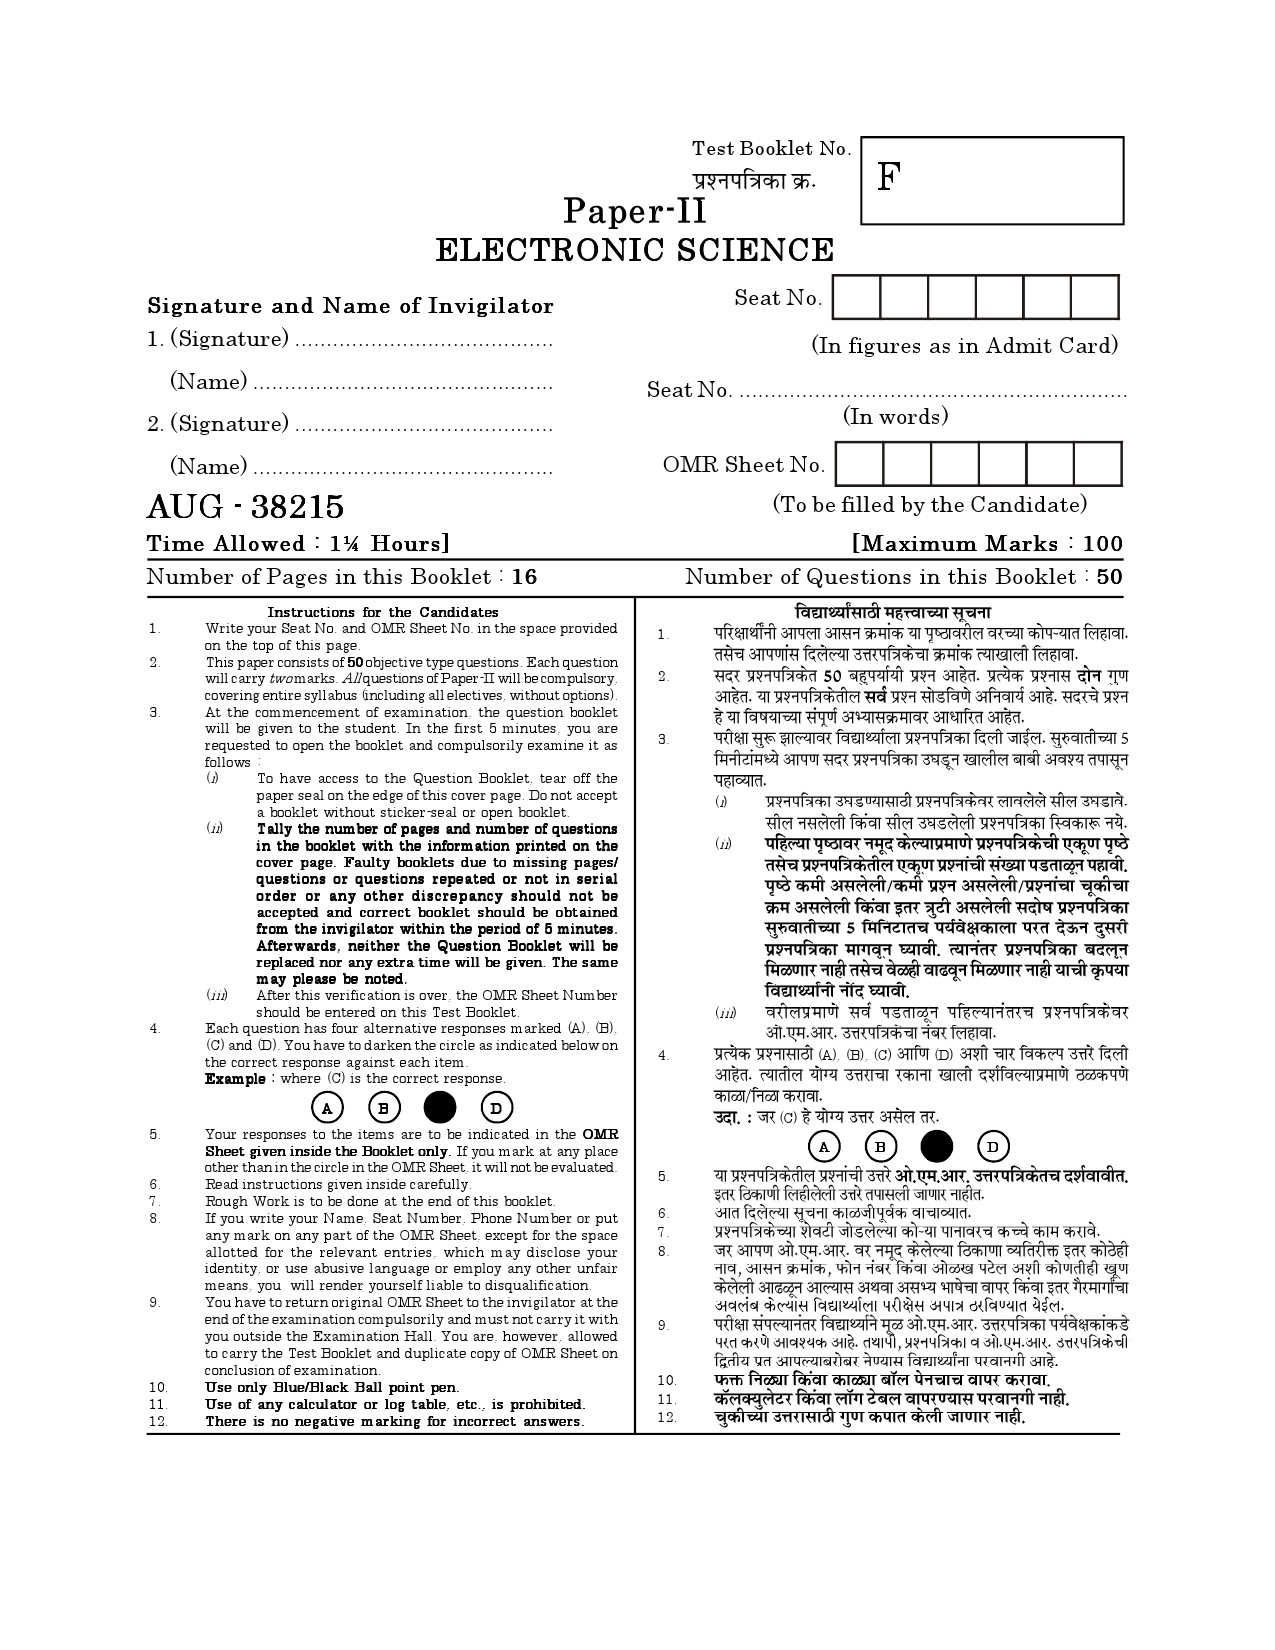 Maharashtra SET Electronics Science Question Paper II August 2015 1